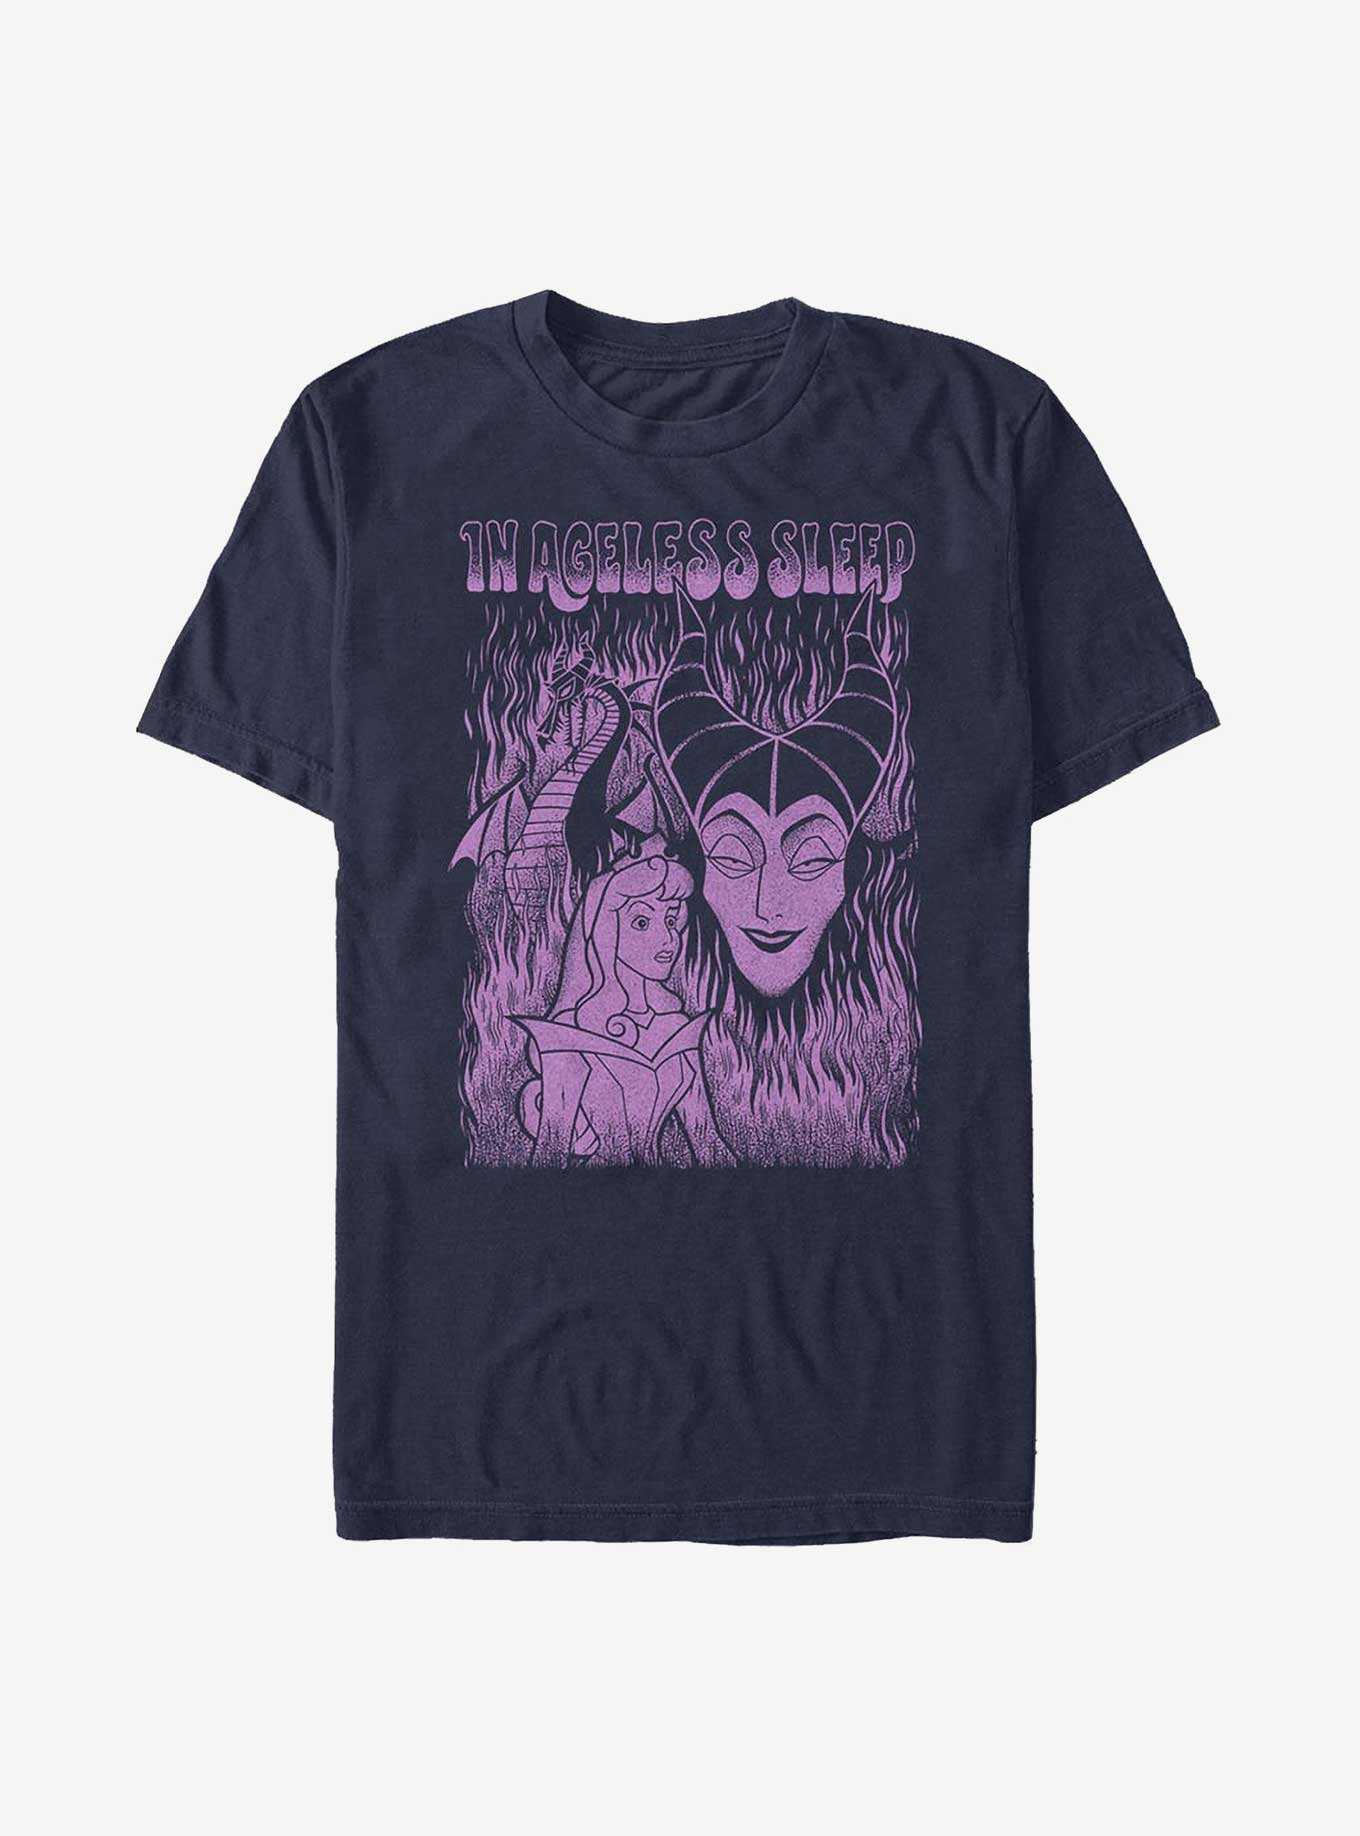 Disney Sleeping Beauty Maleficent and Aurora Ageless Sleep T-Shirt, , hi-res